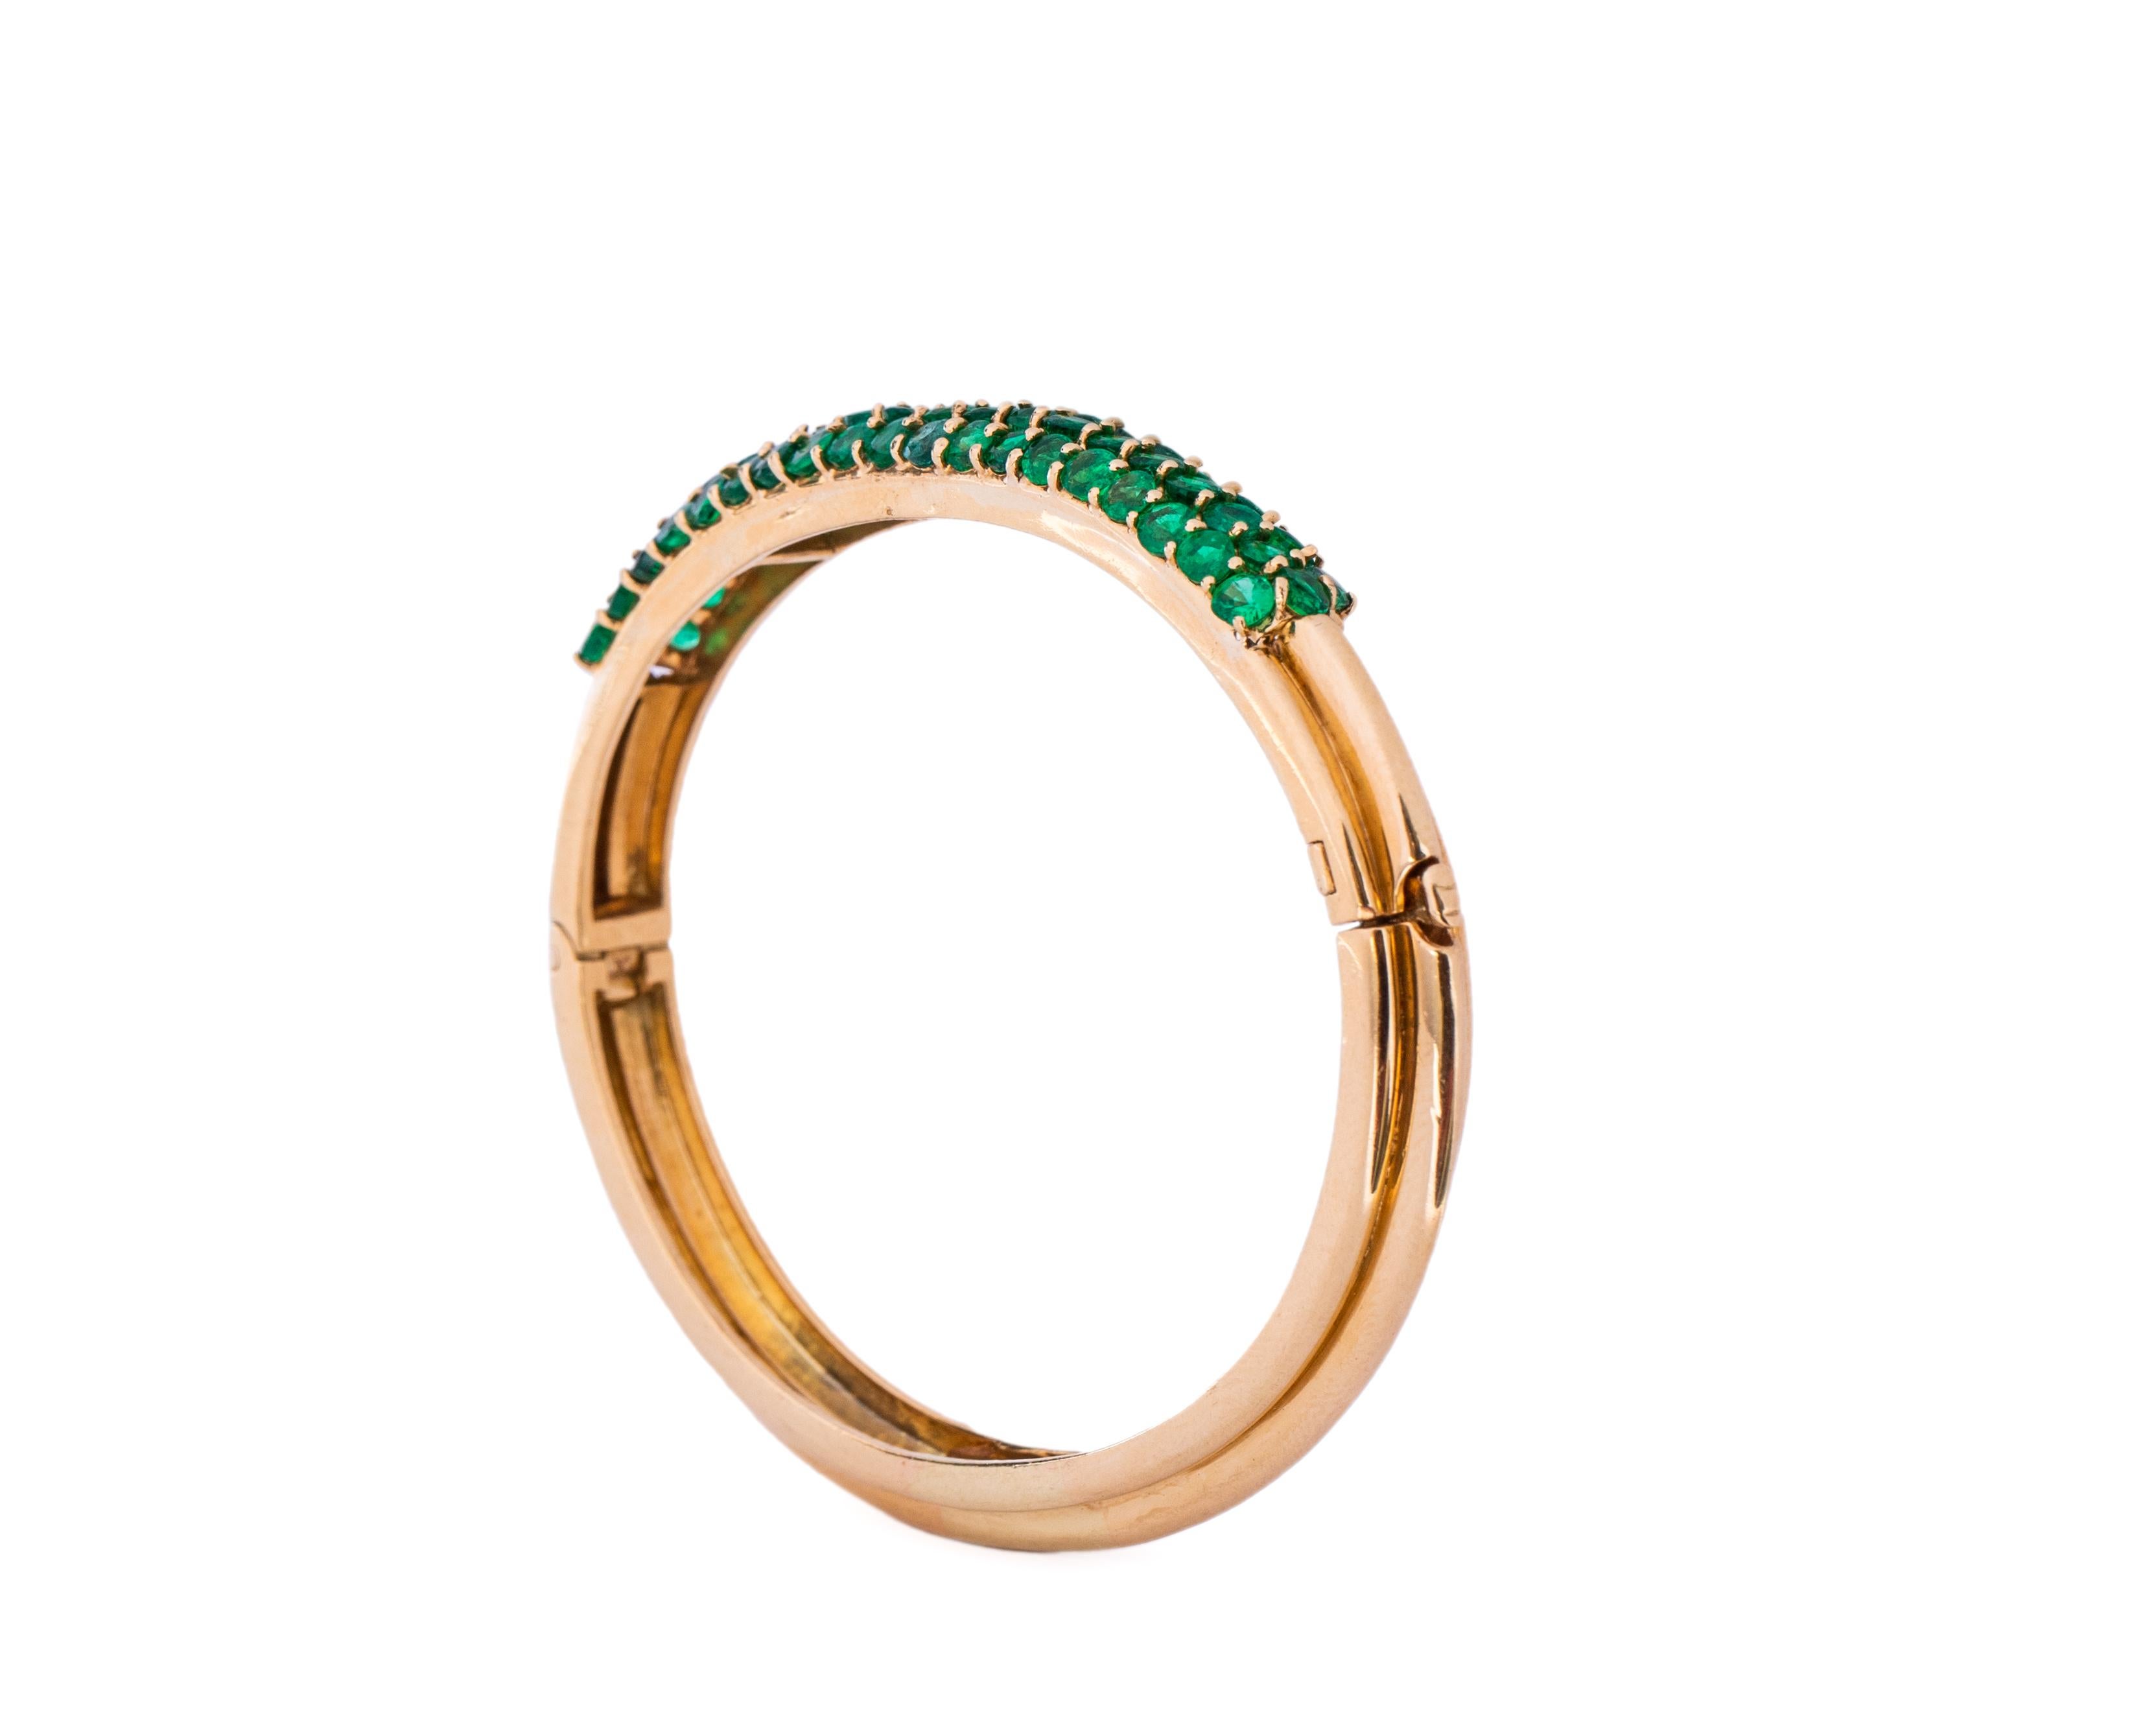 Round Cut 3 Carat Emerald and 18 Karat Gold Bangle Bracelet